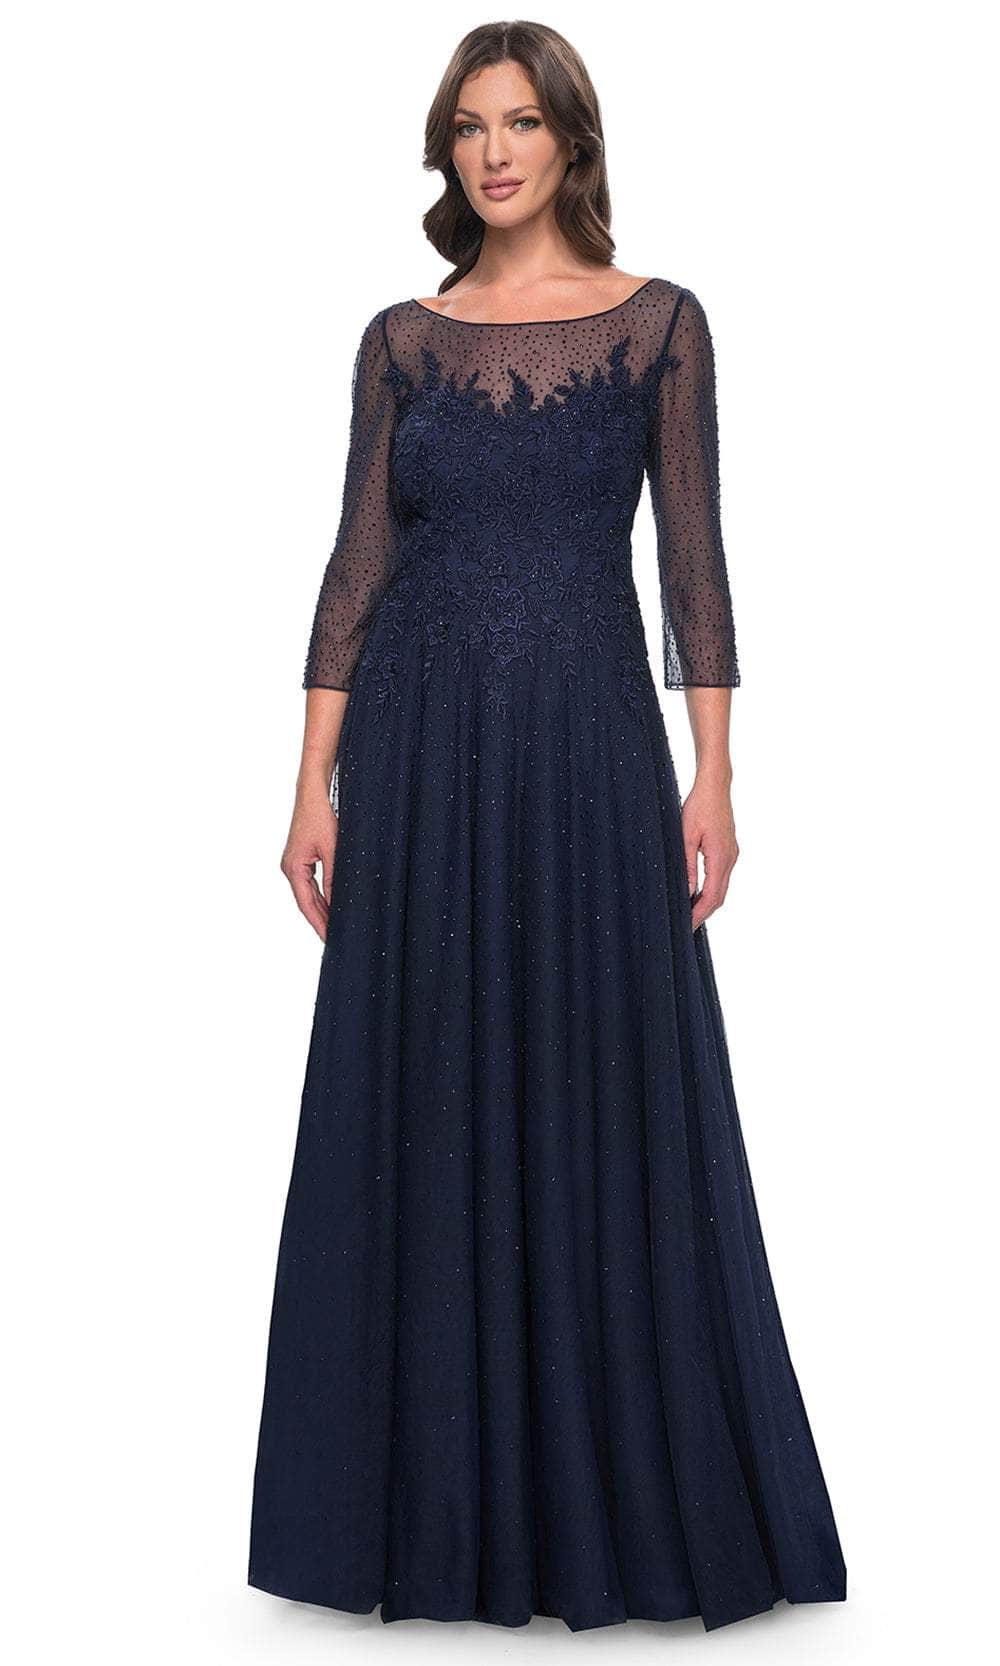 La Femme 31235 - Rhinestone Embellished Quarter Sleeve Gown Mother of the Bride Dresses 4 / Navy